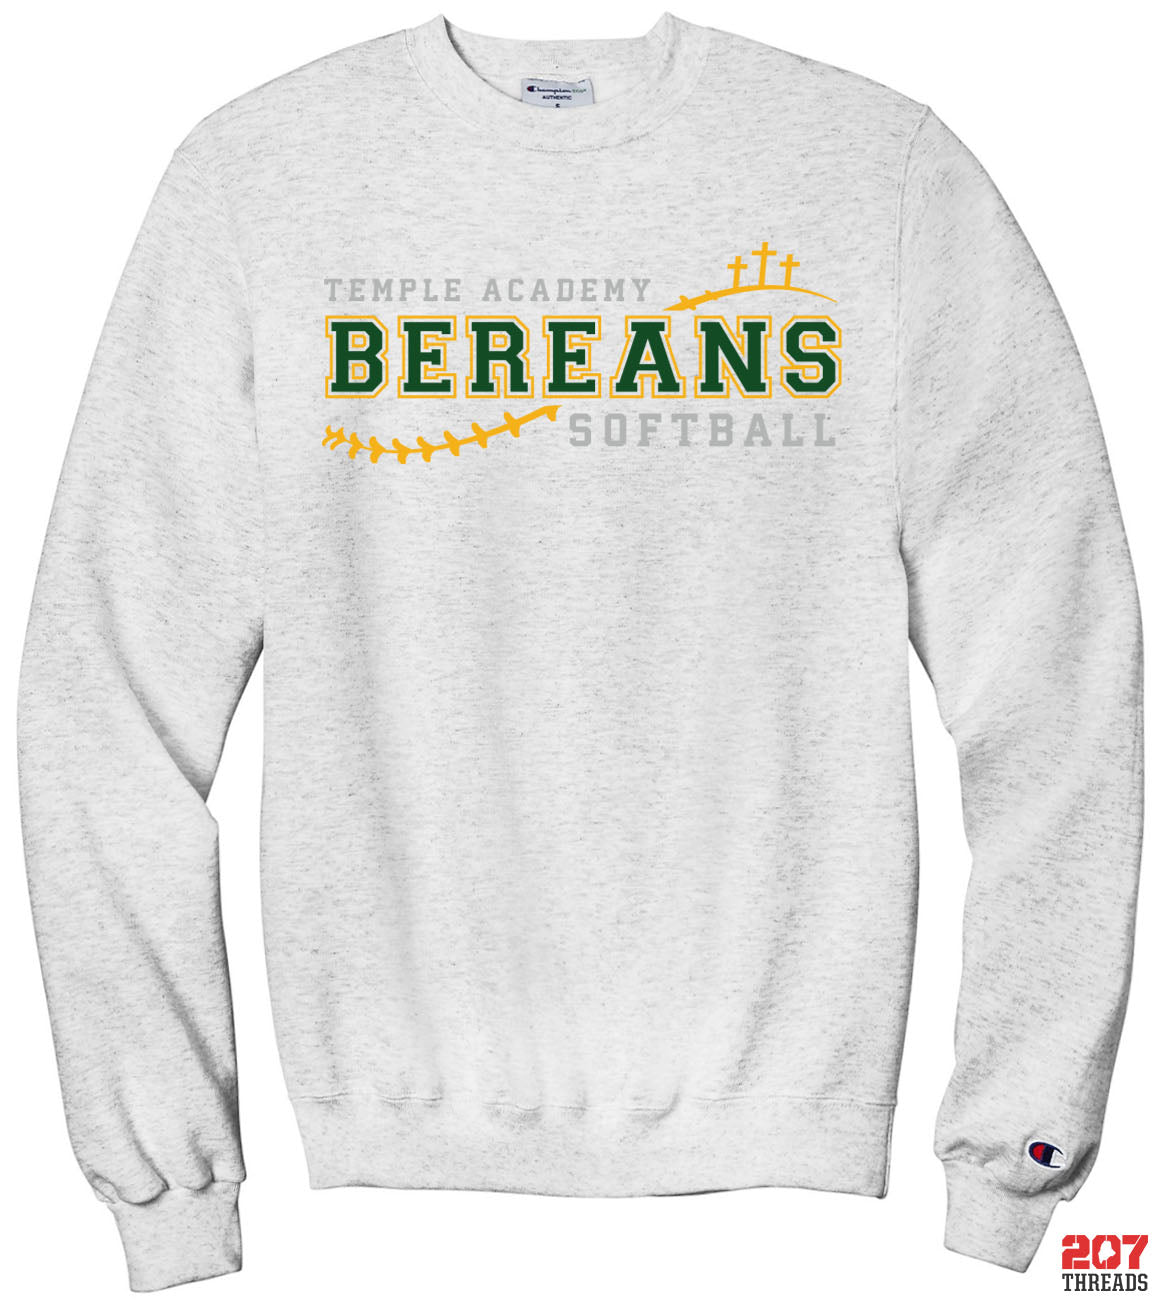 Temple Academy Bereans Softball, Golgotha Hill - Champion Sweatshirts-207 Threads